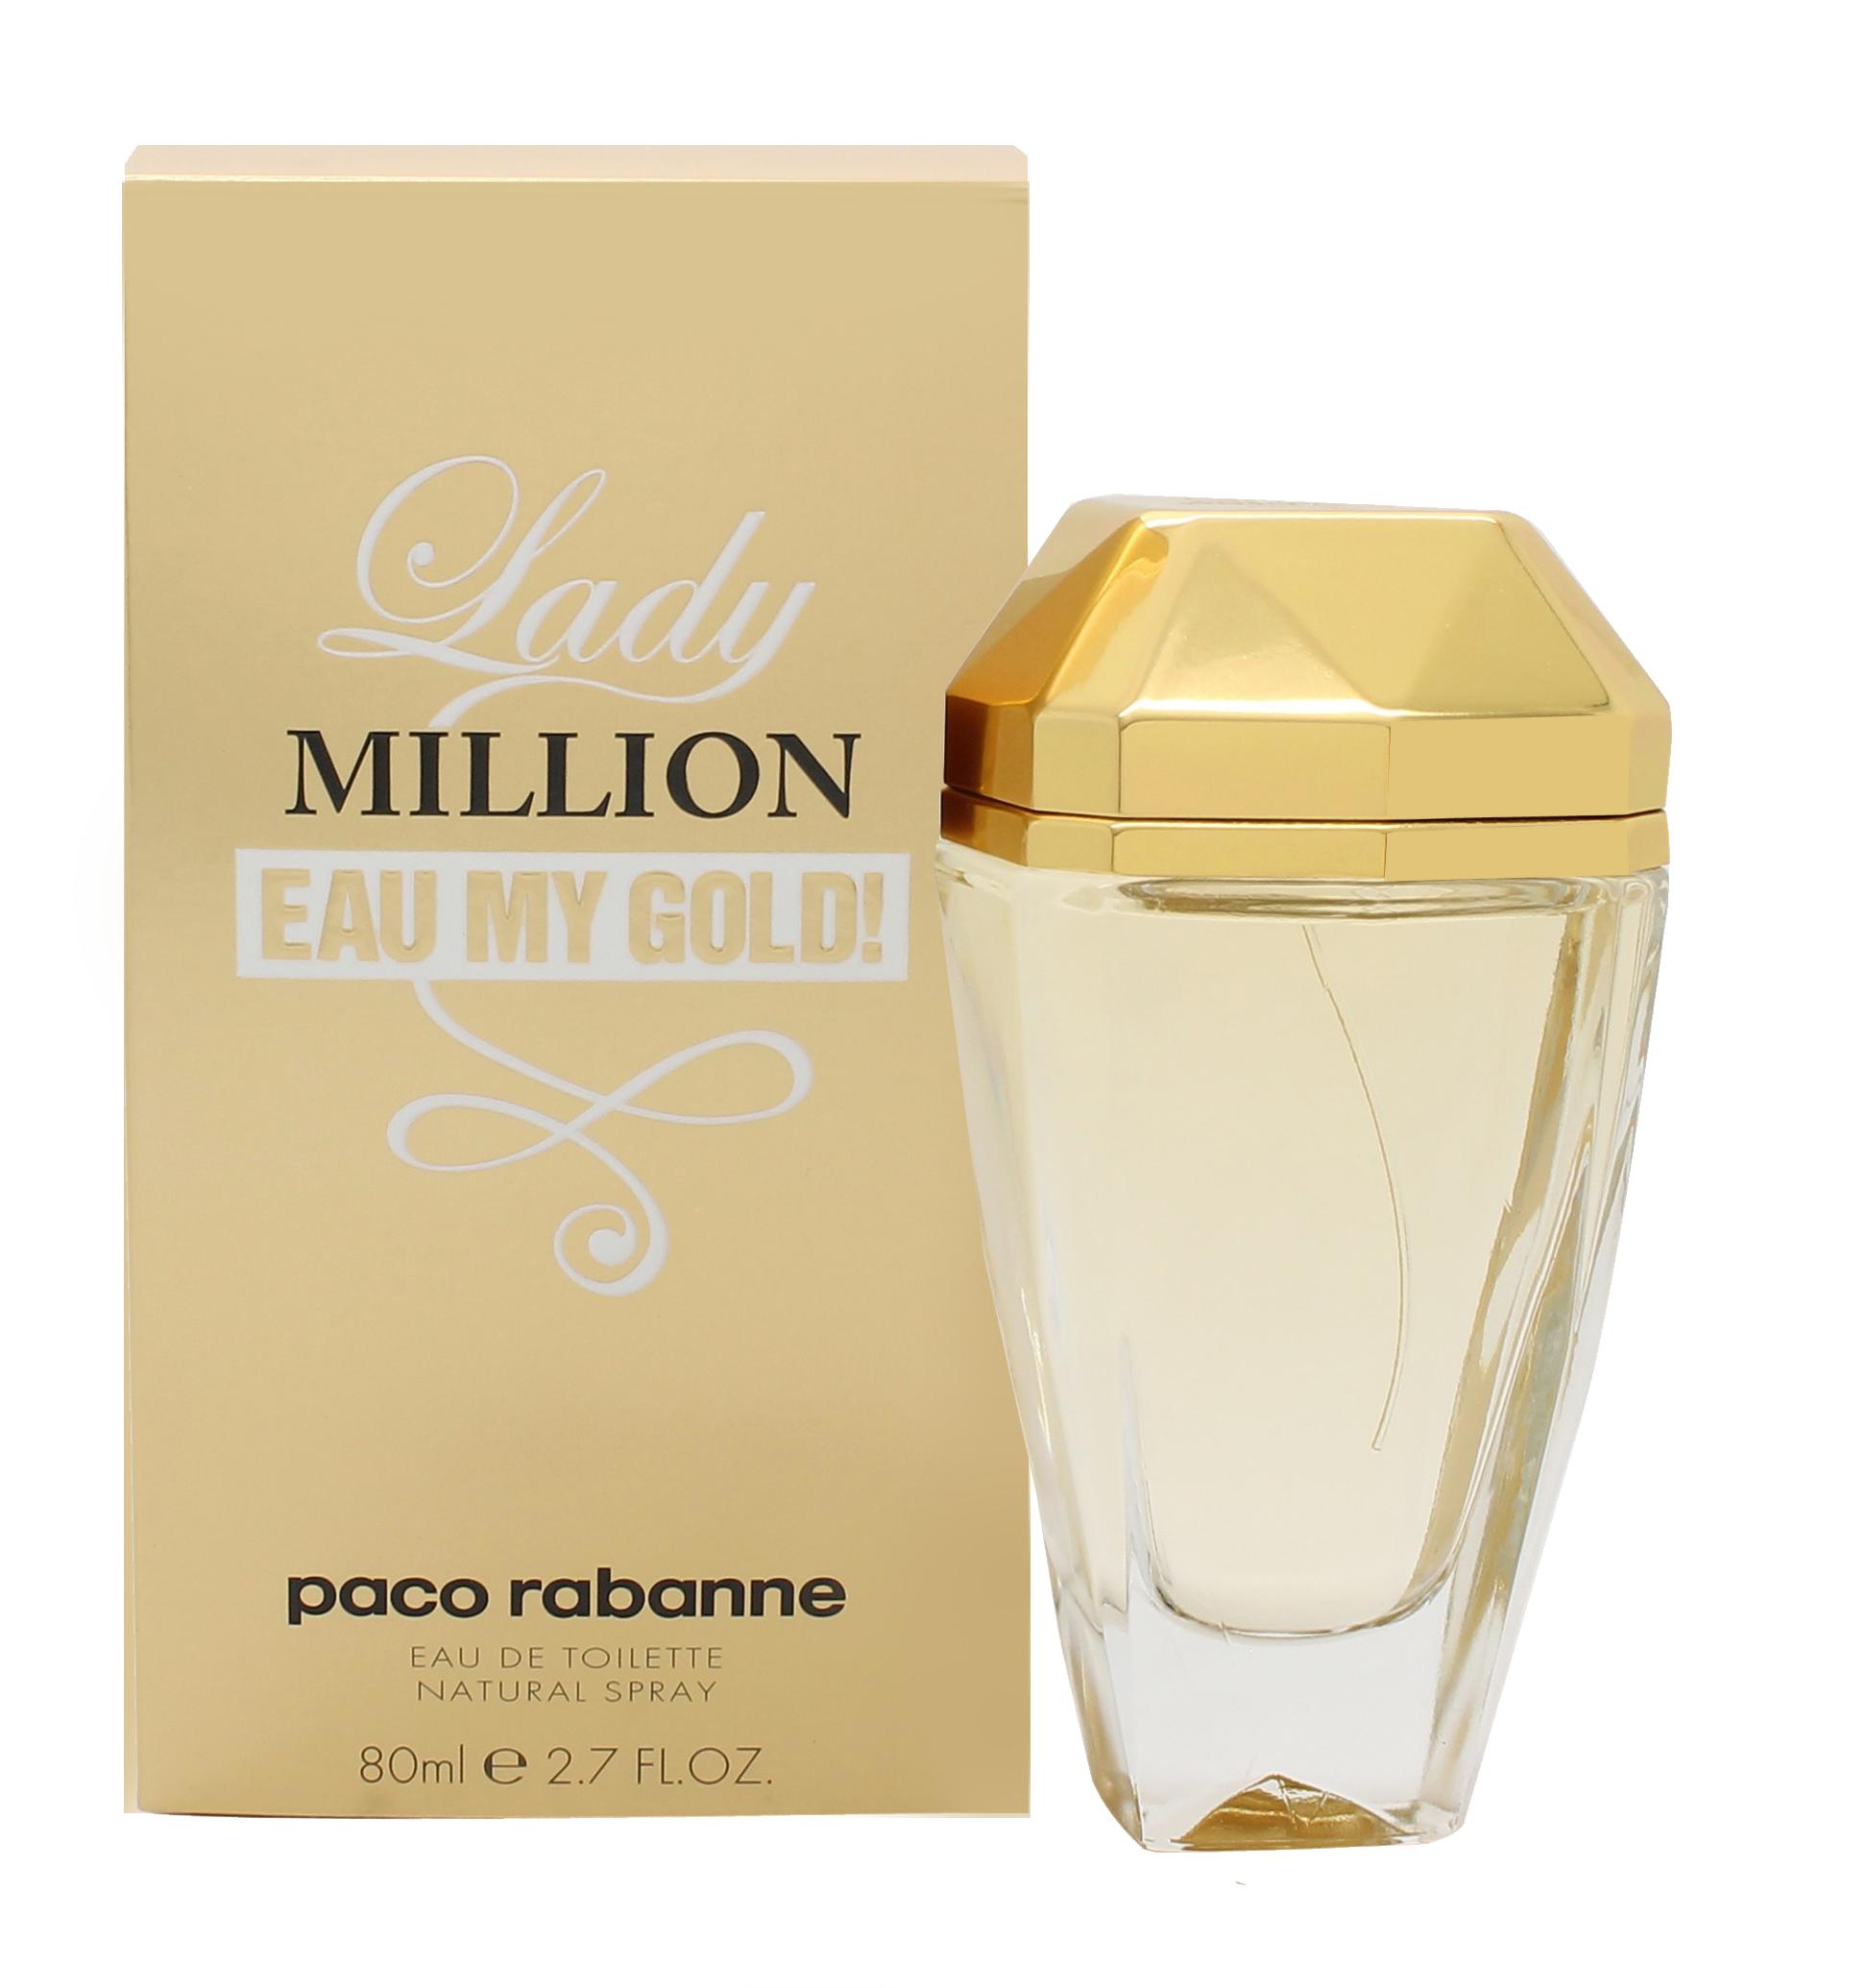 Paco Rabanne Lady Million Eau My Gold! Eau de Toilette 80ml Spray